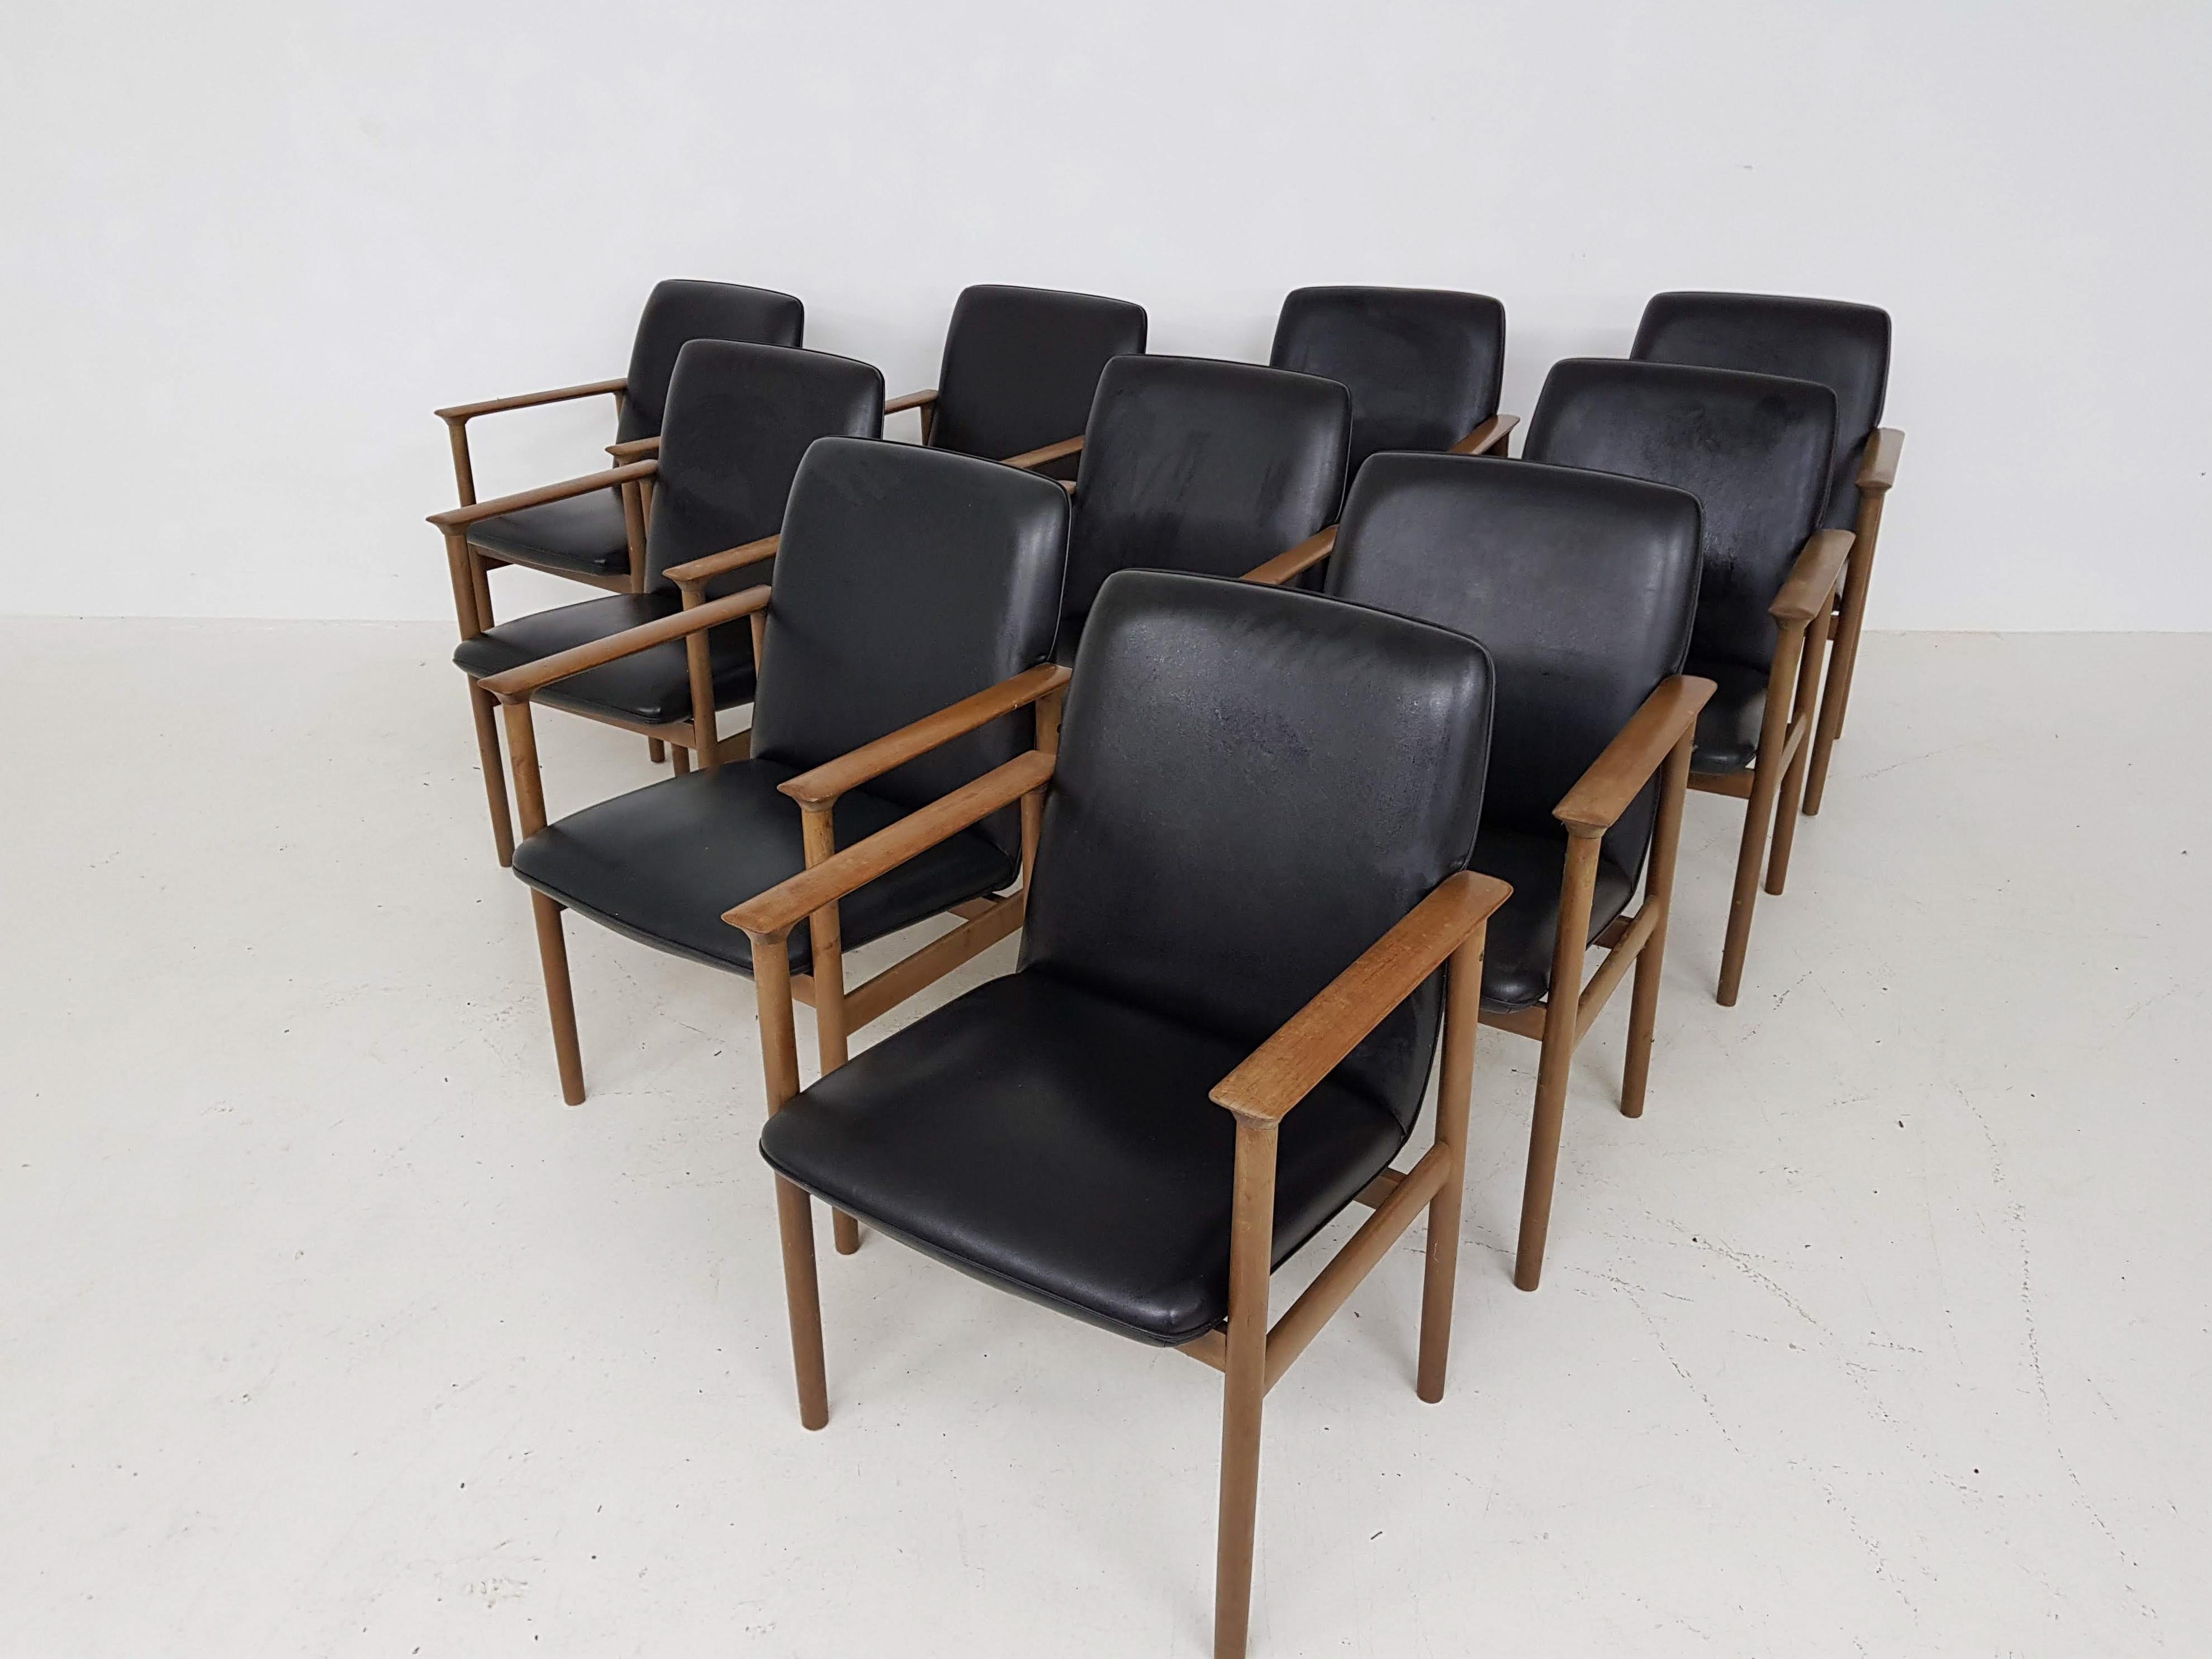 Mid-Century Modern 1x “Impala” Dining Chair by Cor Bontebal for Fristho, Dutch Design